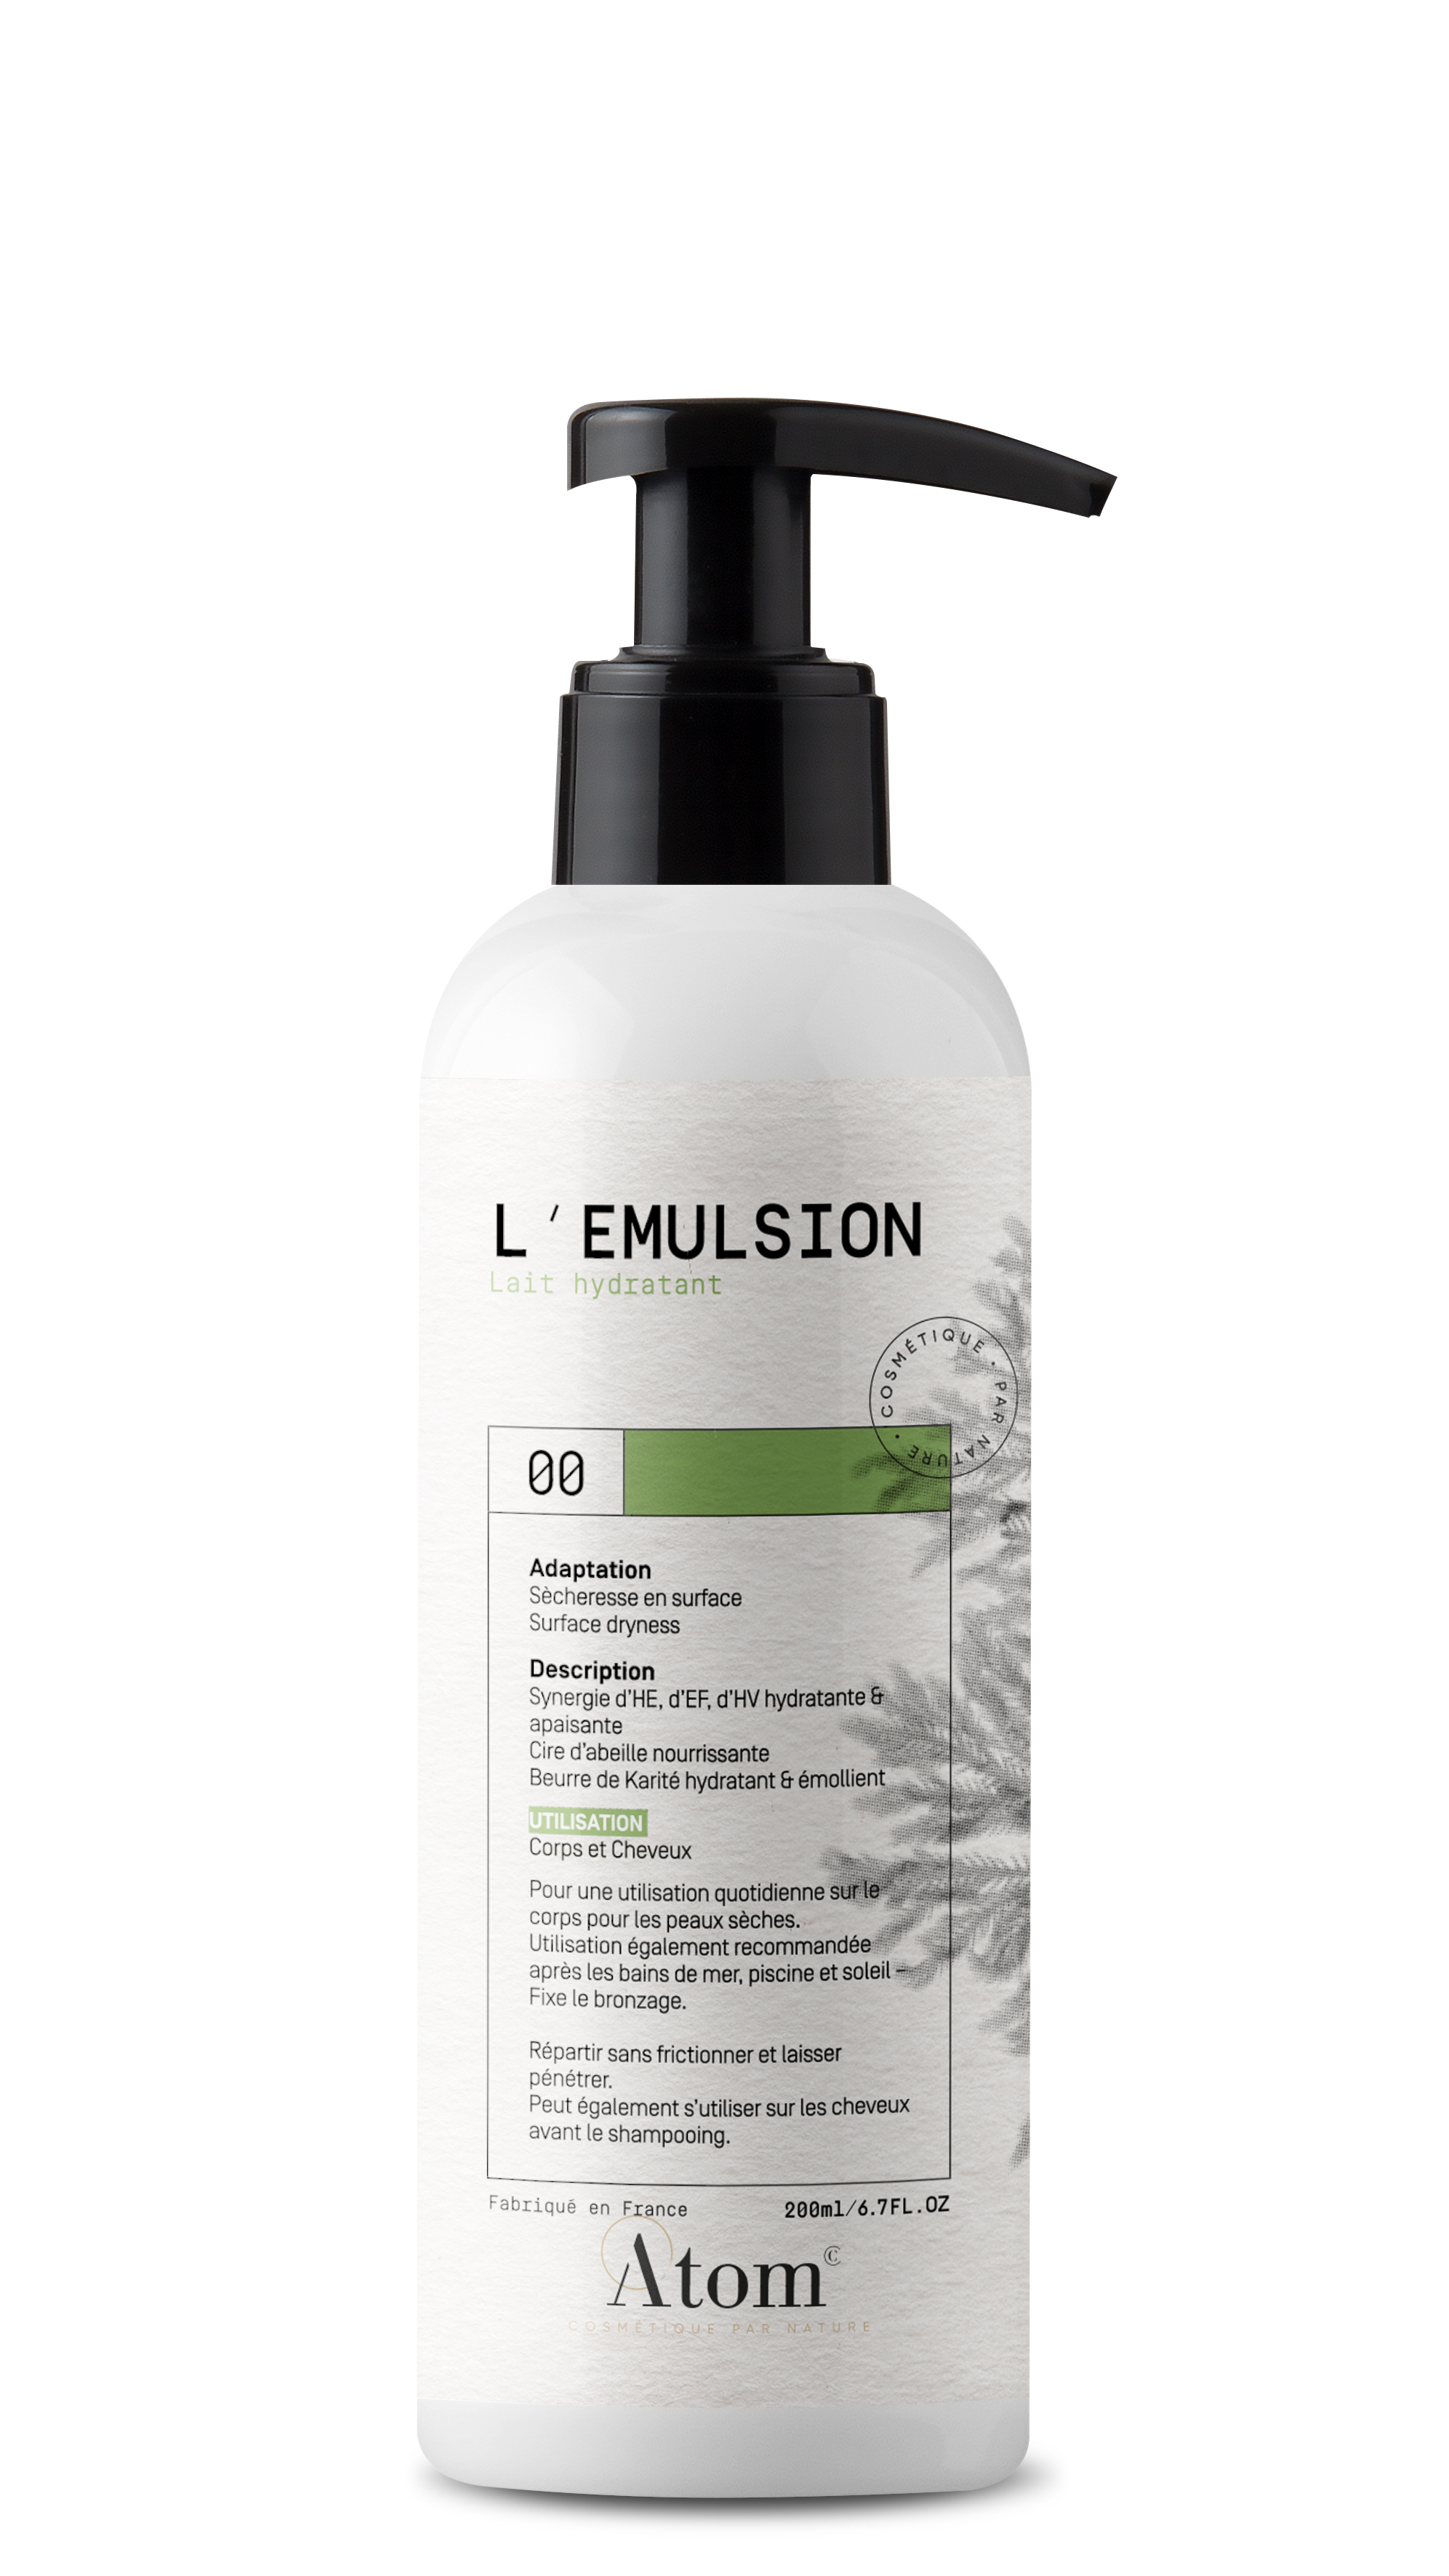 Emulsion- Lait Hydratant - Atom